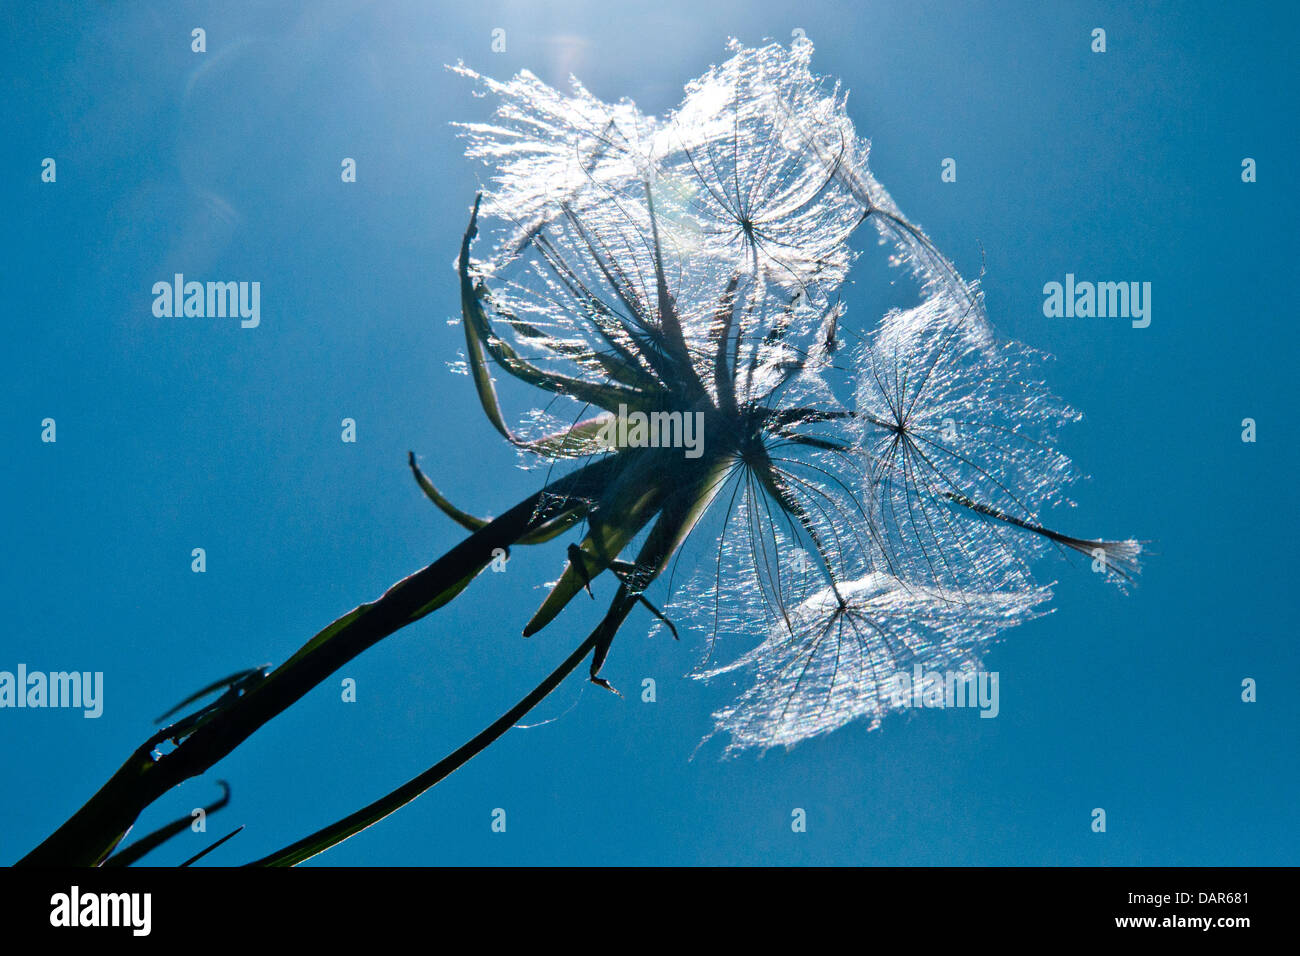 A dandelion seed head against a bright blue summer sky. Stock Photo